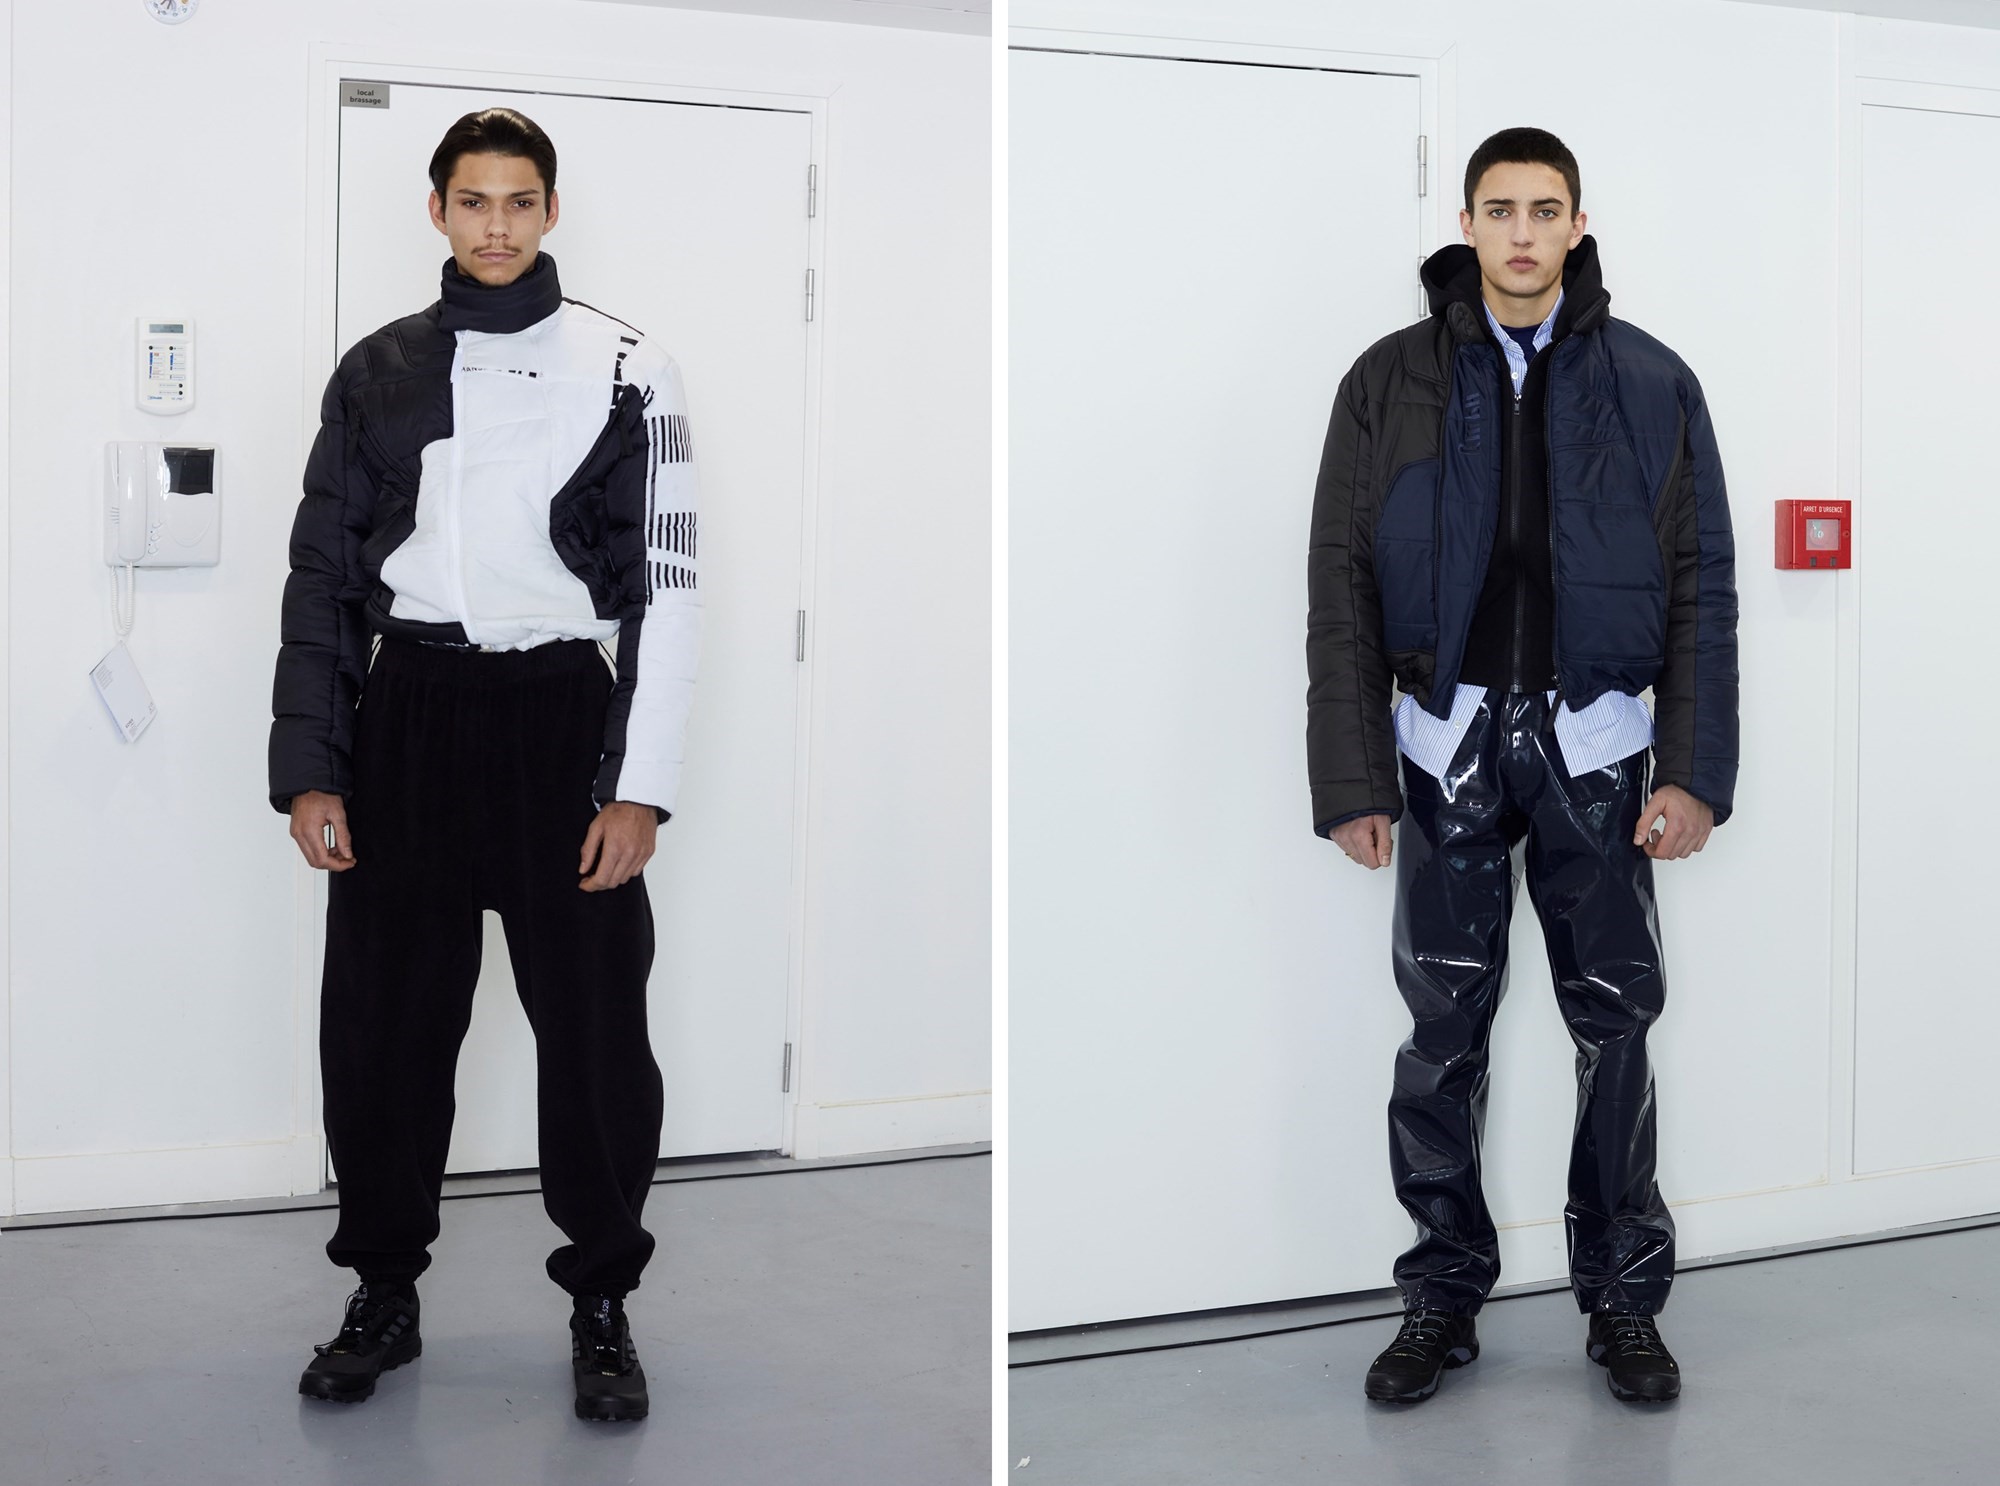 Open Augment nikkel The brand injecting Paris fashion with Berlin techno Menswear | Dazed